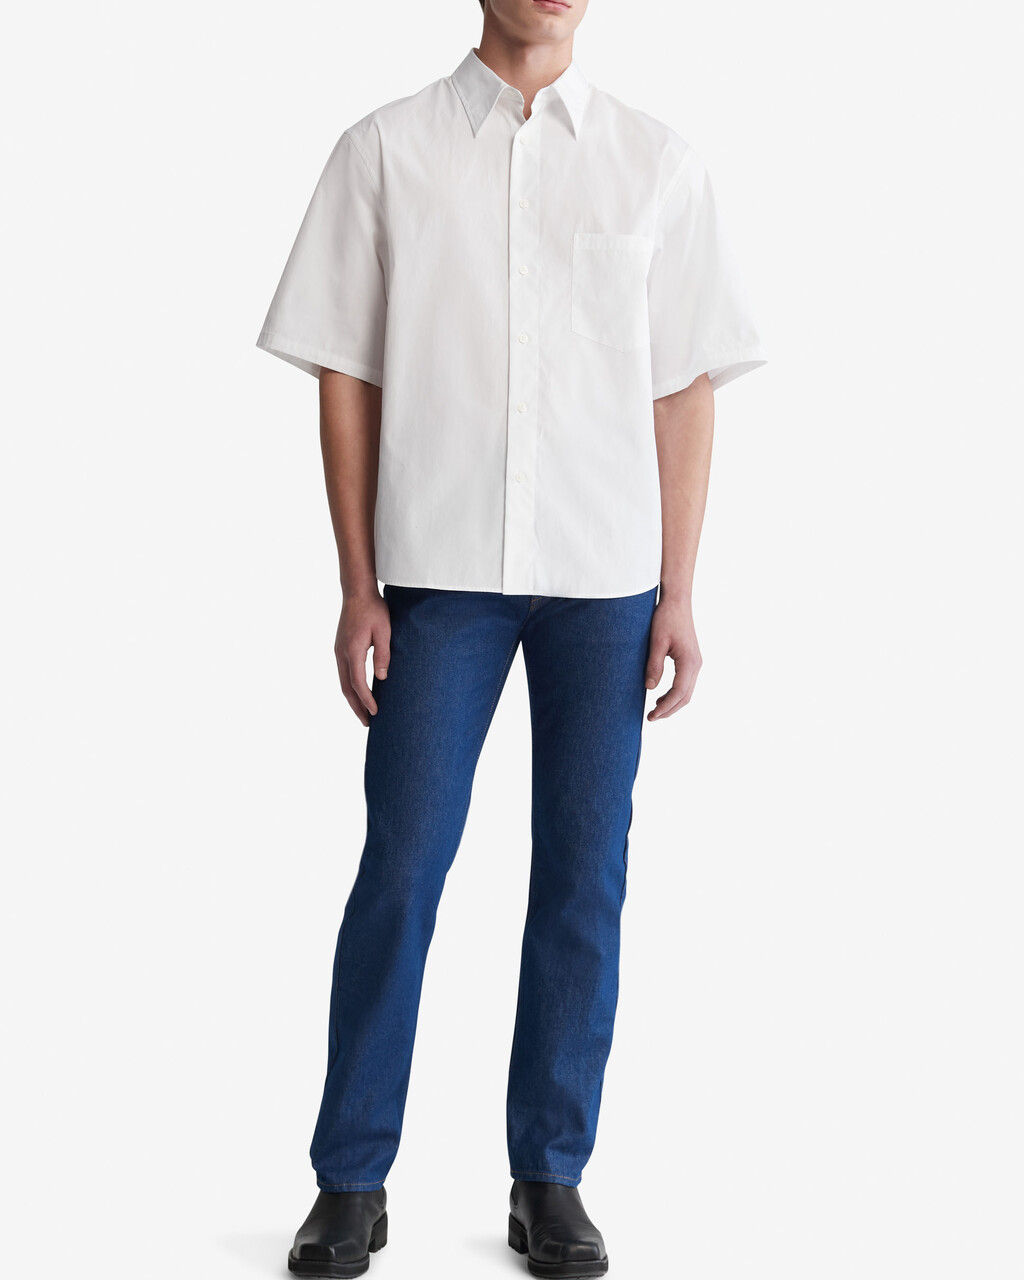 KHAKIS 寬鬆版型裇衫, Brilliant White, hi-res